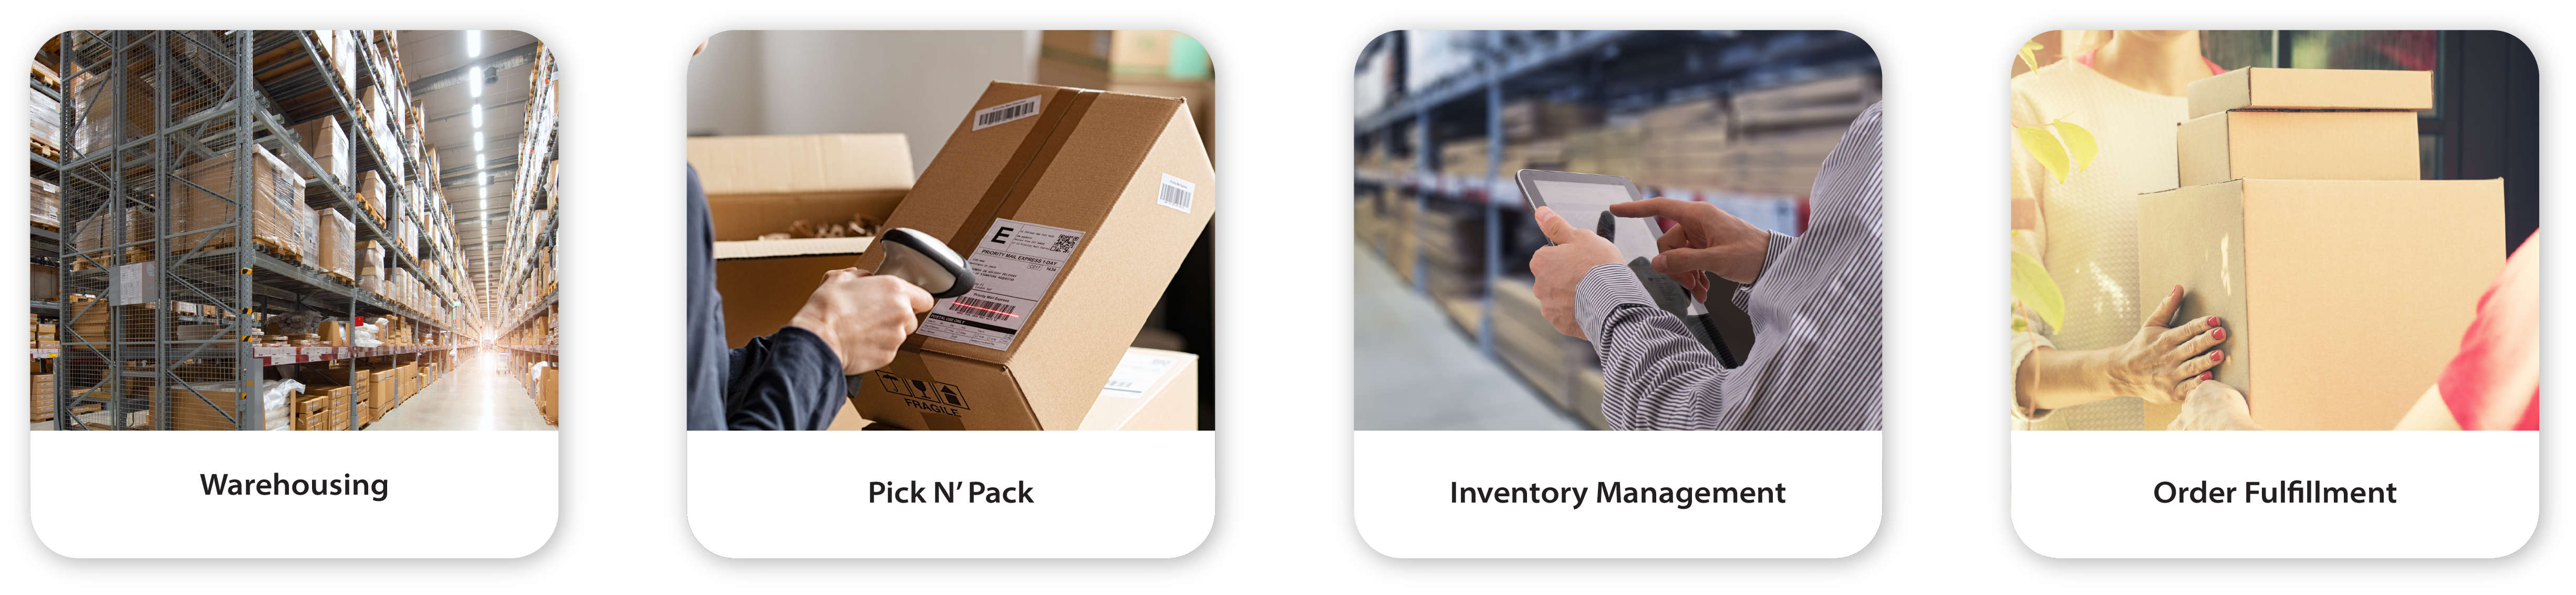 Warehousing, Pick N'Pack, Inventory Management, Order Fulfillment